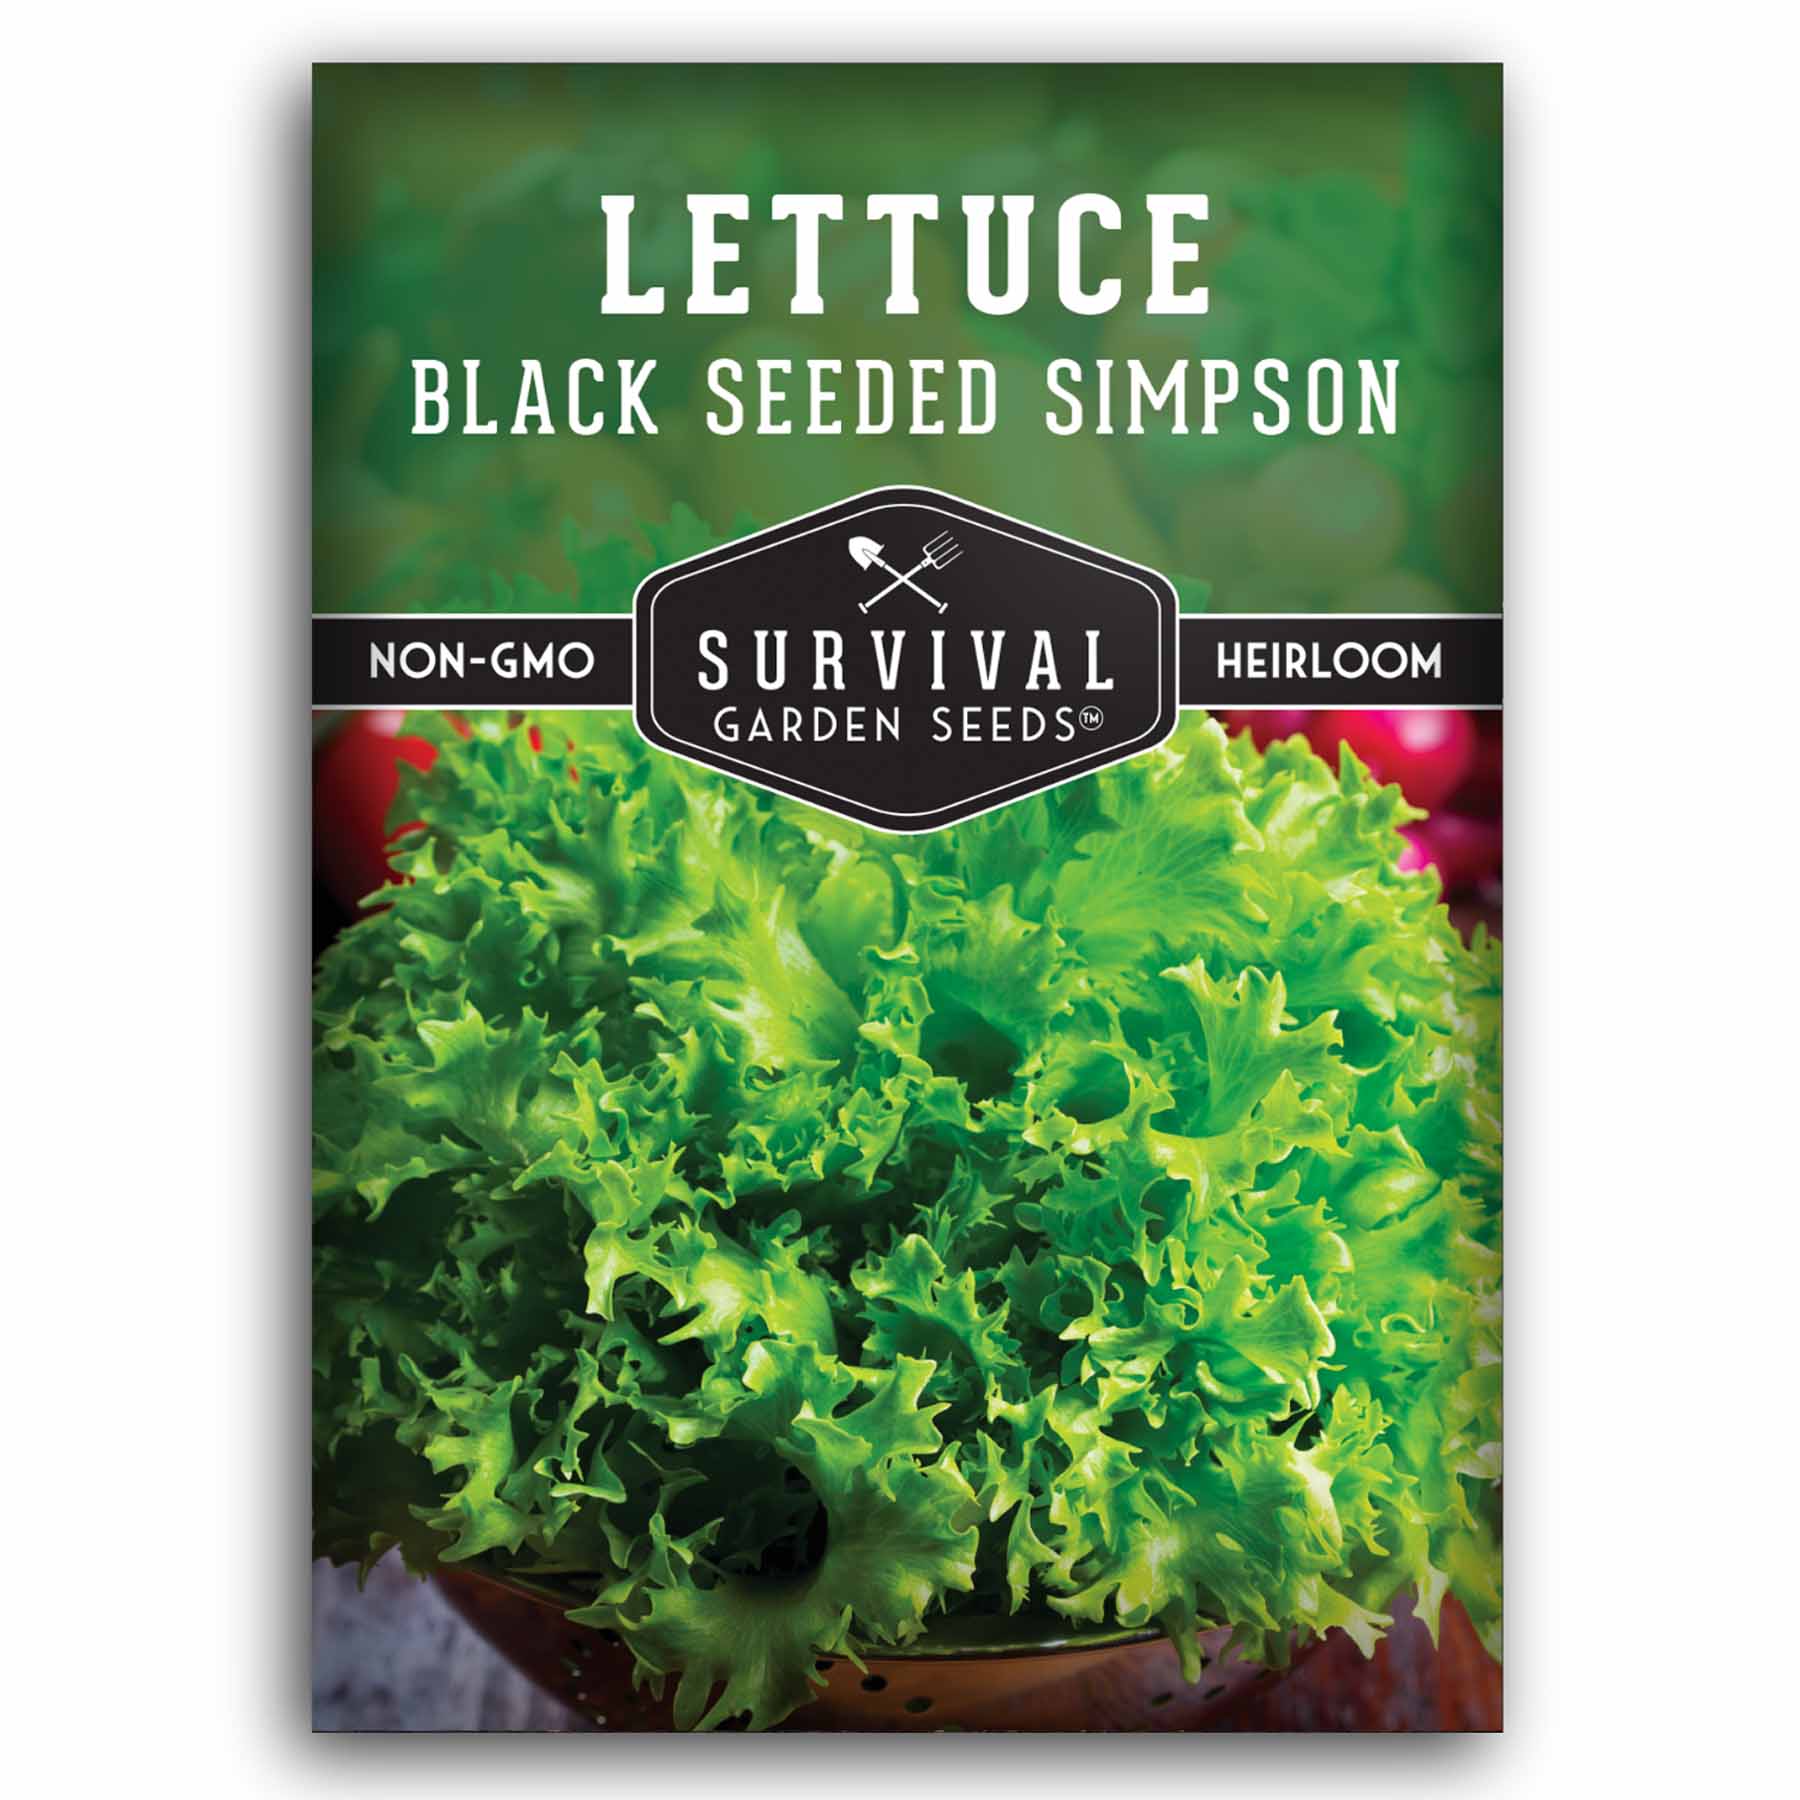 1 packet of Black Seeded Simpson Lettuce seeds